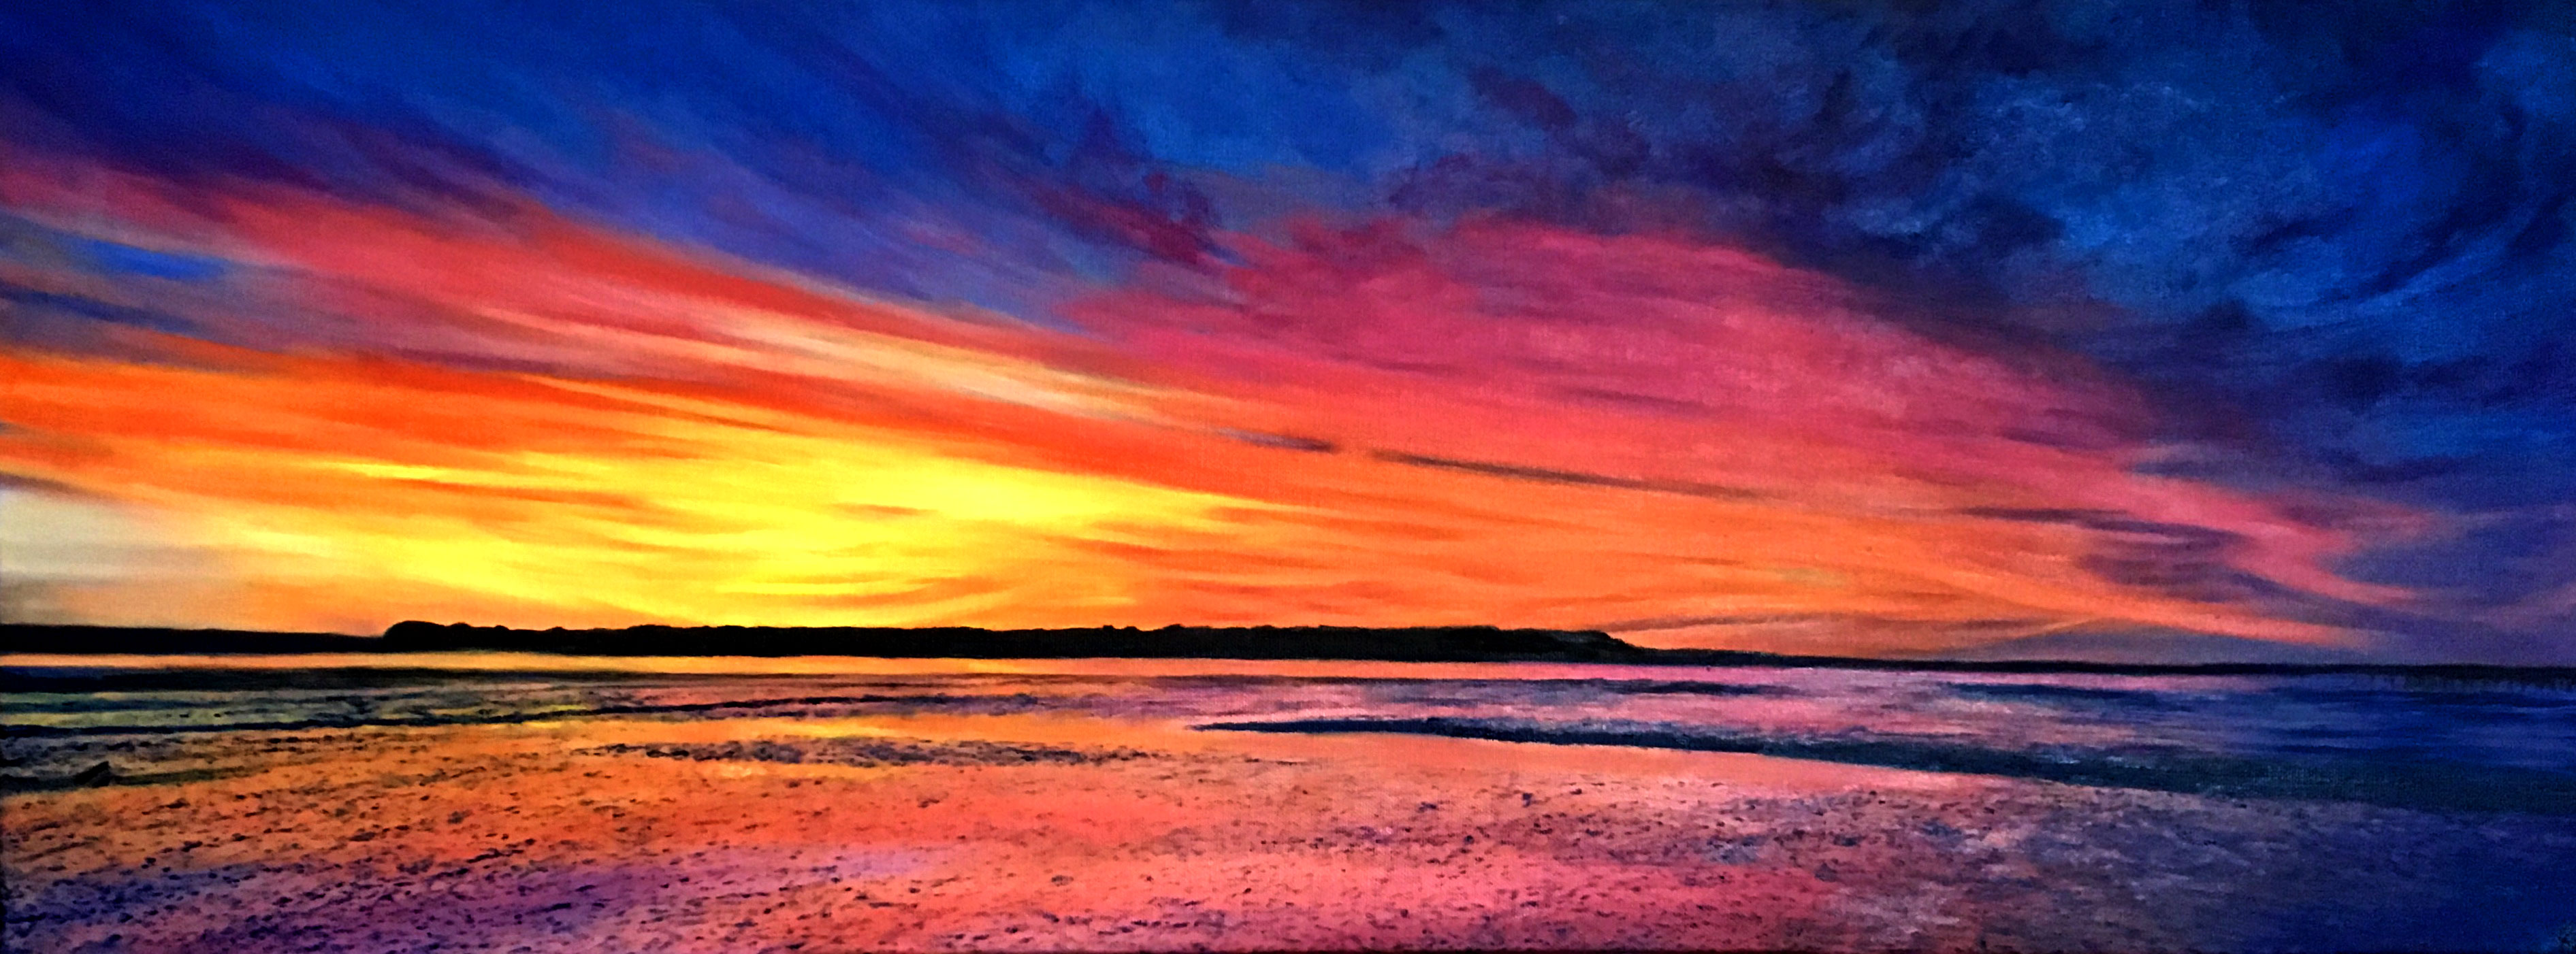 Sandbanks sunset oil painting